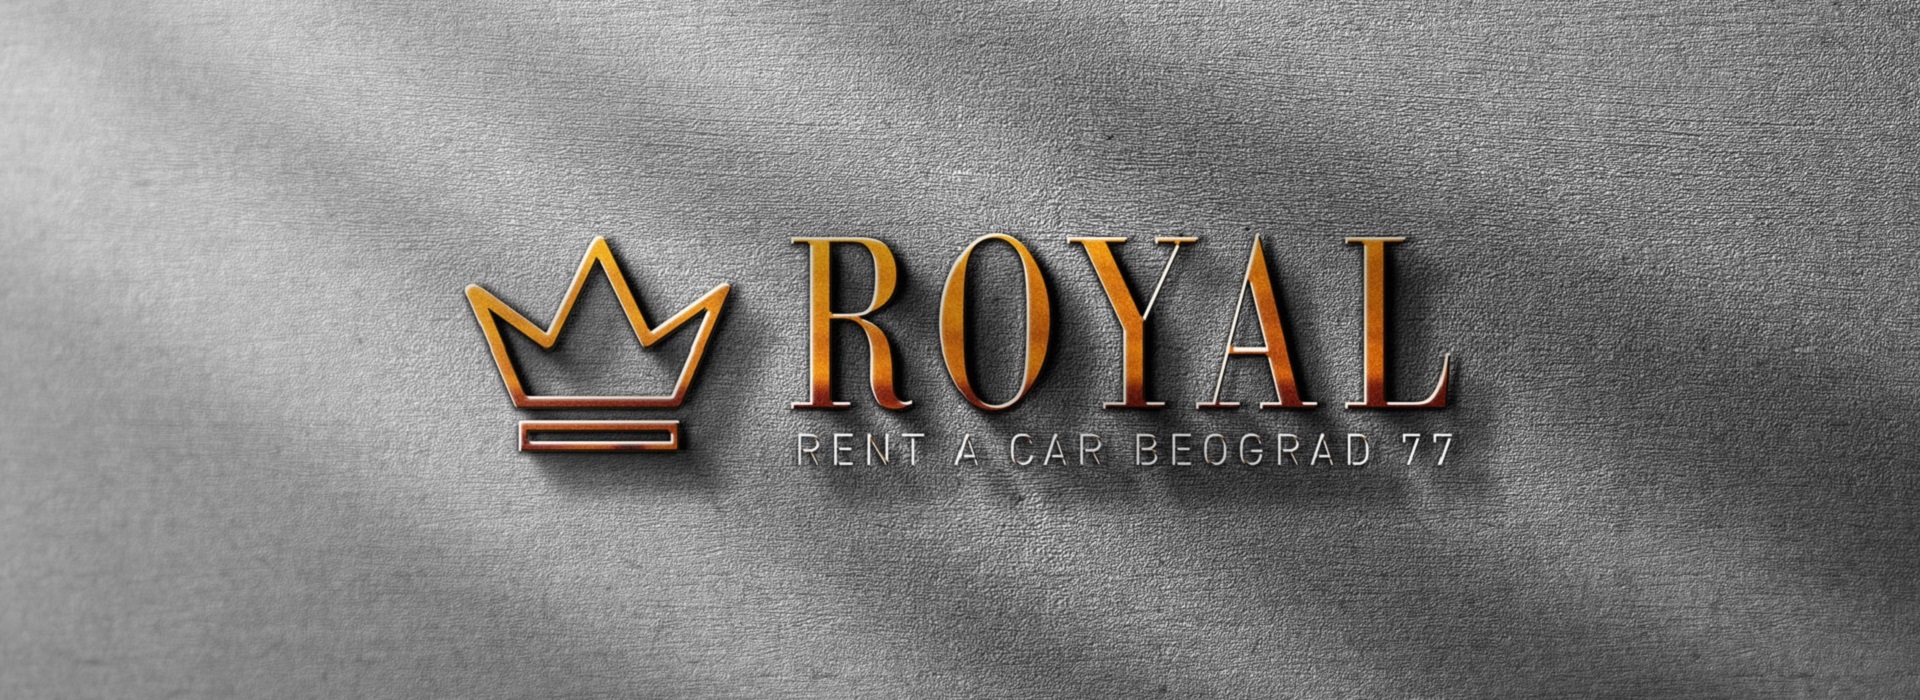 Cryogas | Car rental Beograd Royal